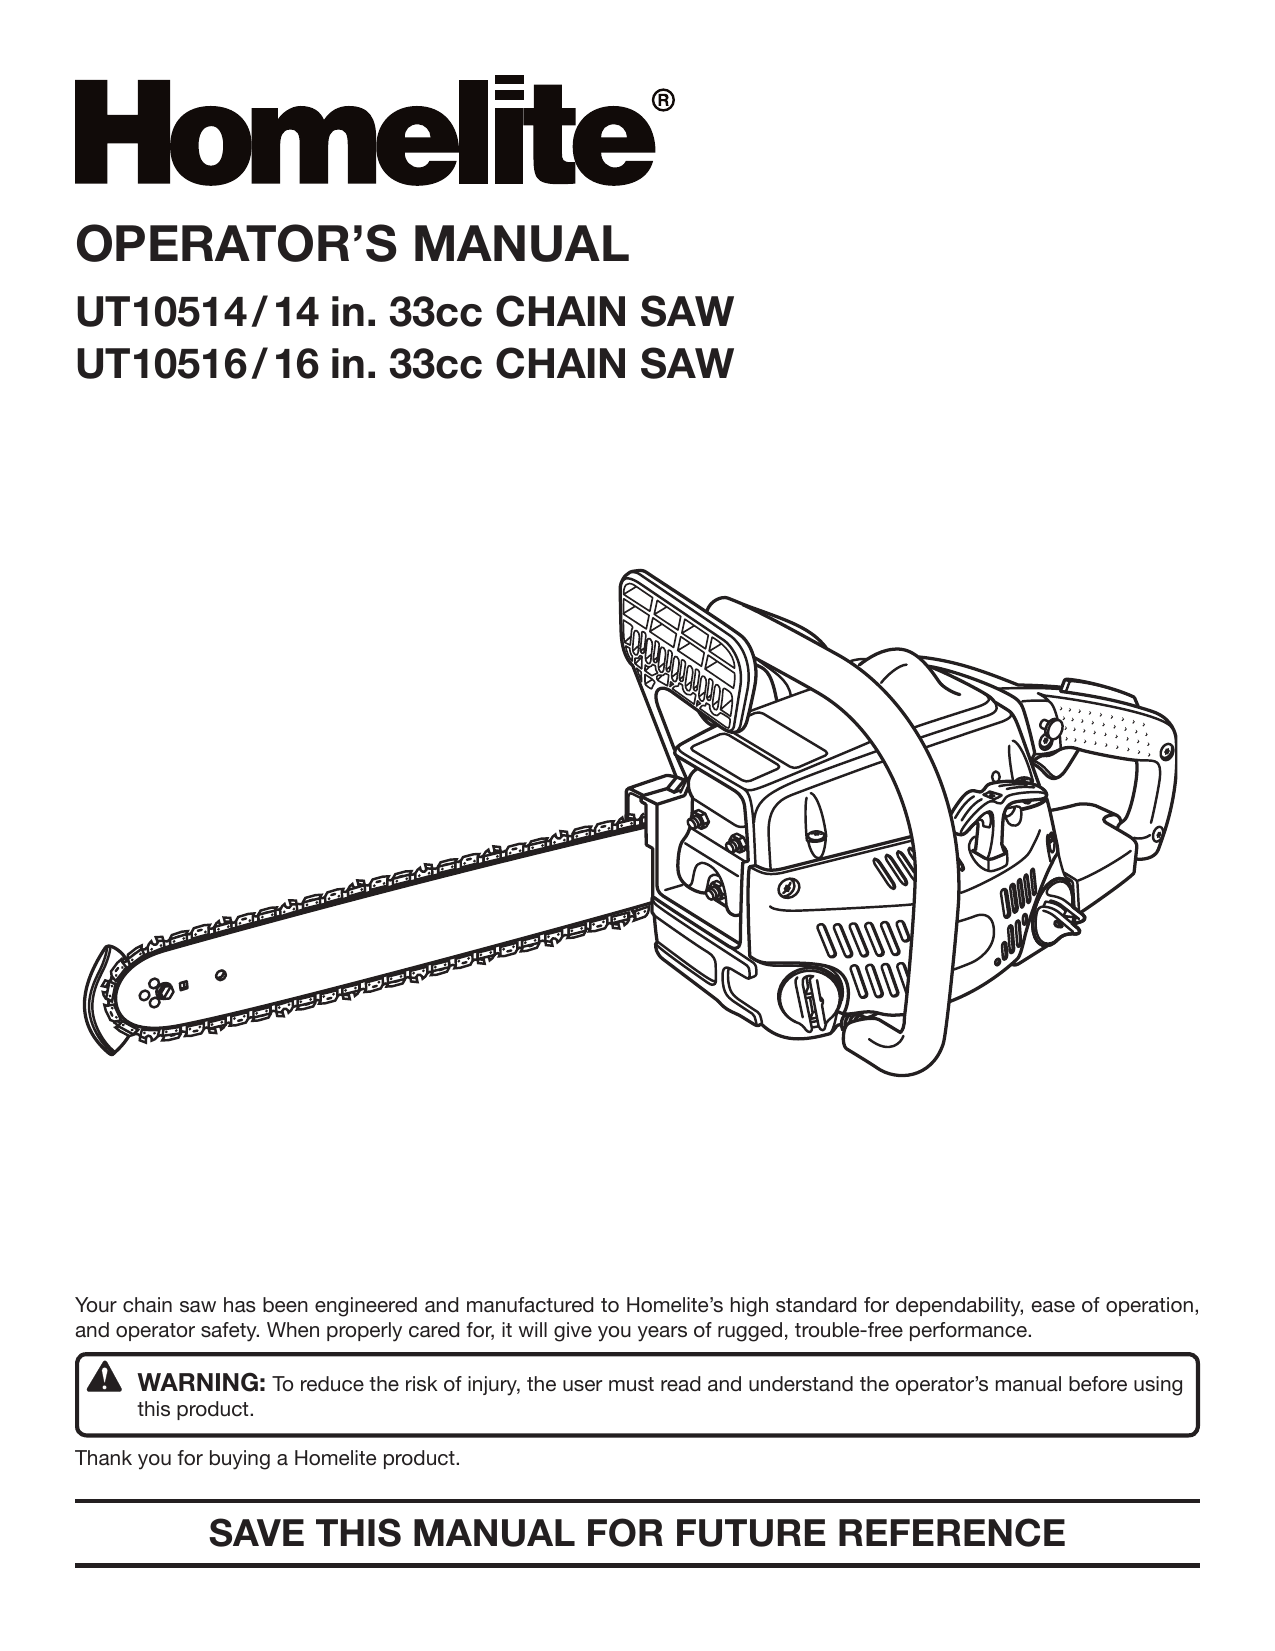 Homelite Chainsaw UT10516/16 IN. 33CC User manual | Manualzz